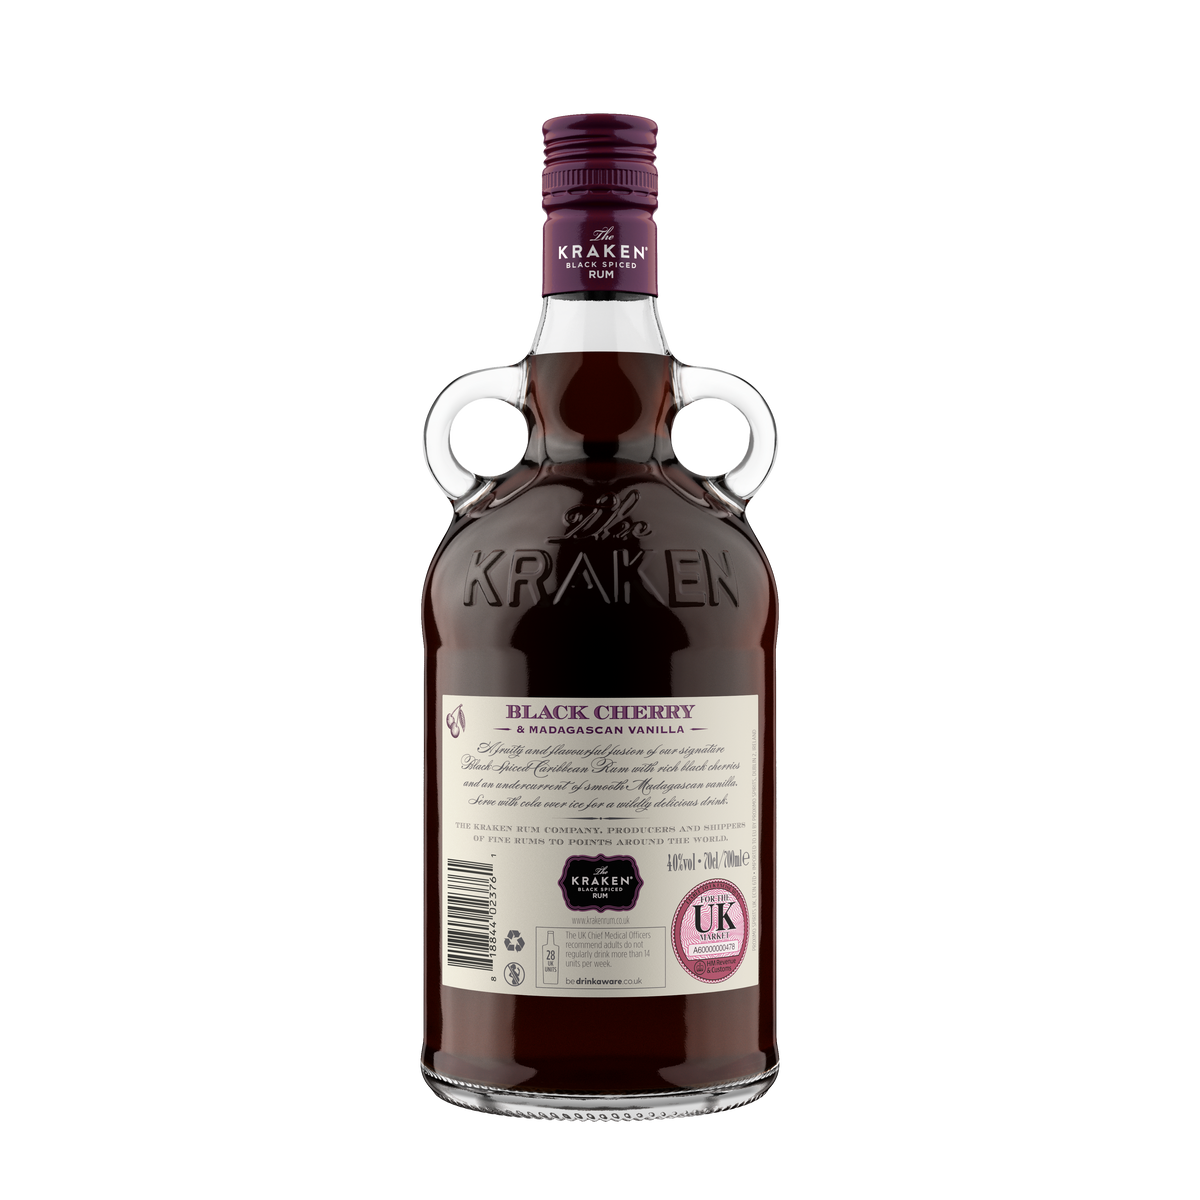 The Kraken Black House Rum Madagascan Spirits Black Vanilla of 70cl Cherry and – Spiced